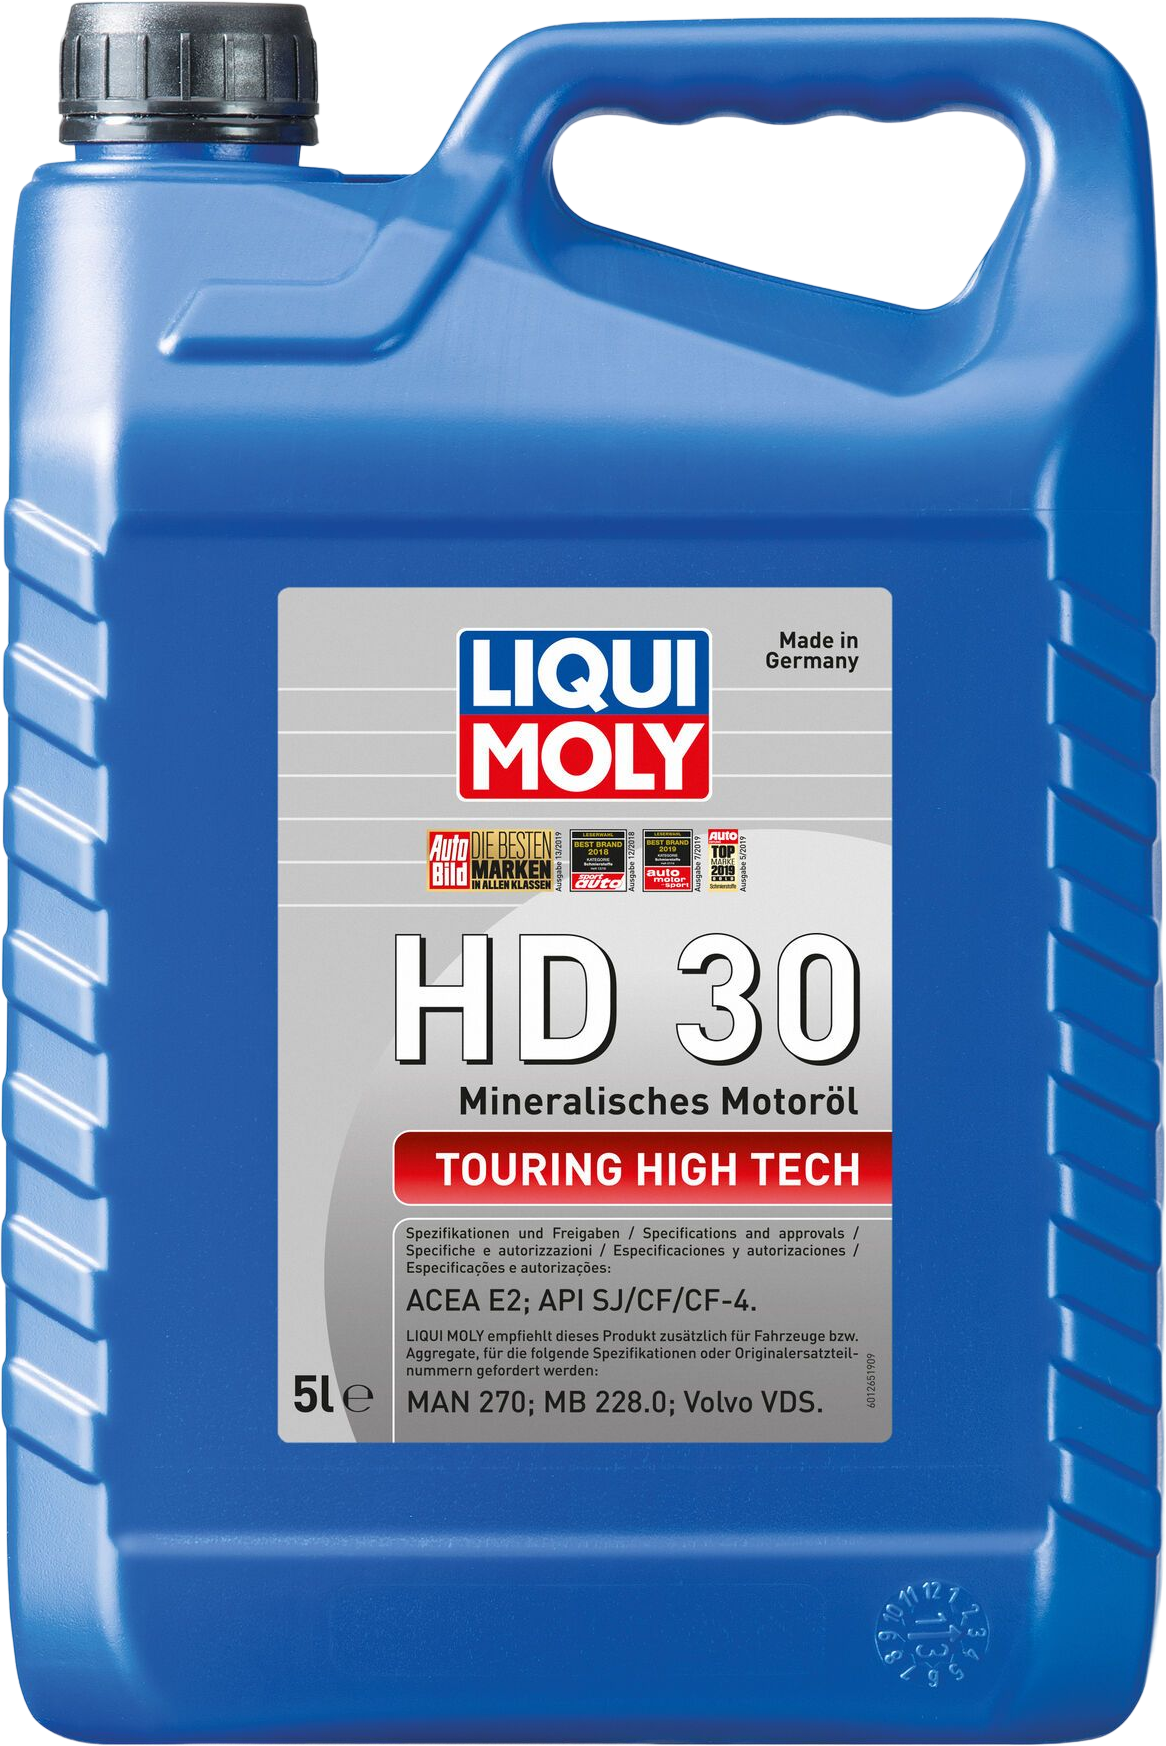 Liqui Moly Touring High Tech HD 30, 4 x 5 lt detail 2